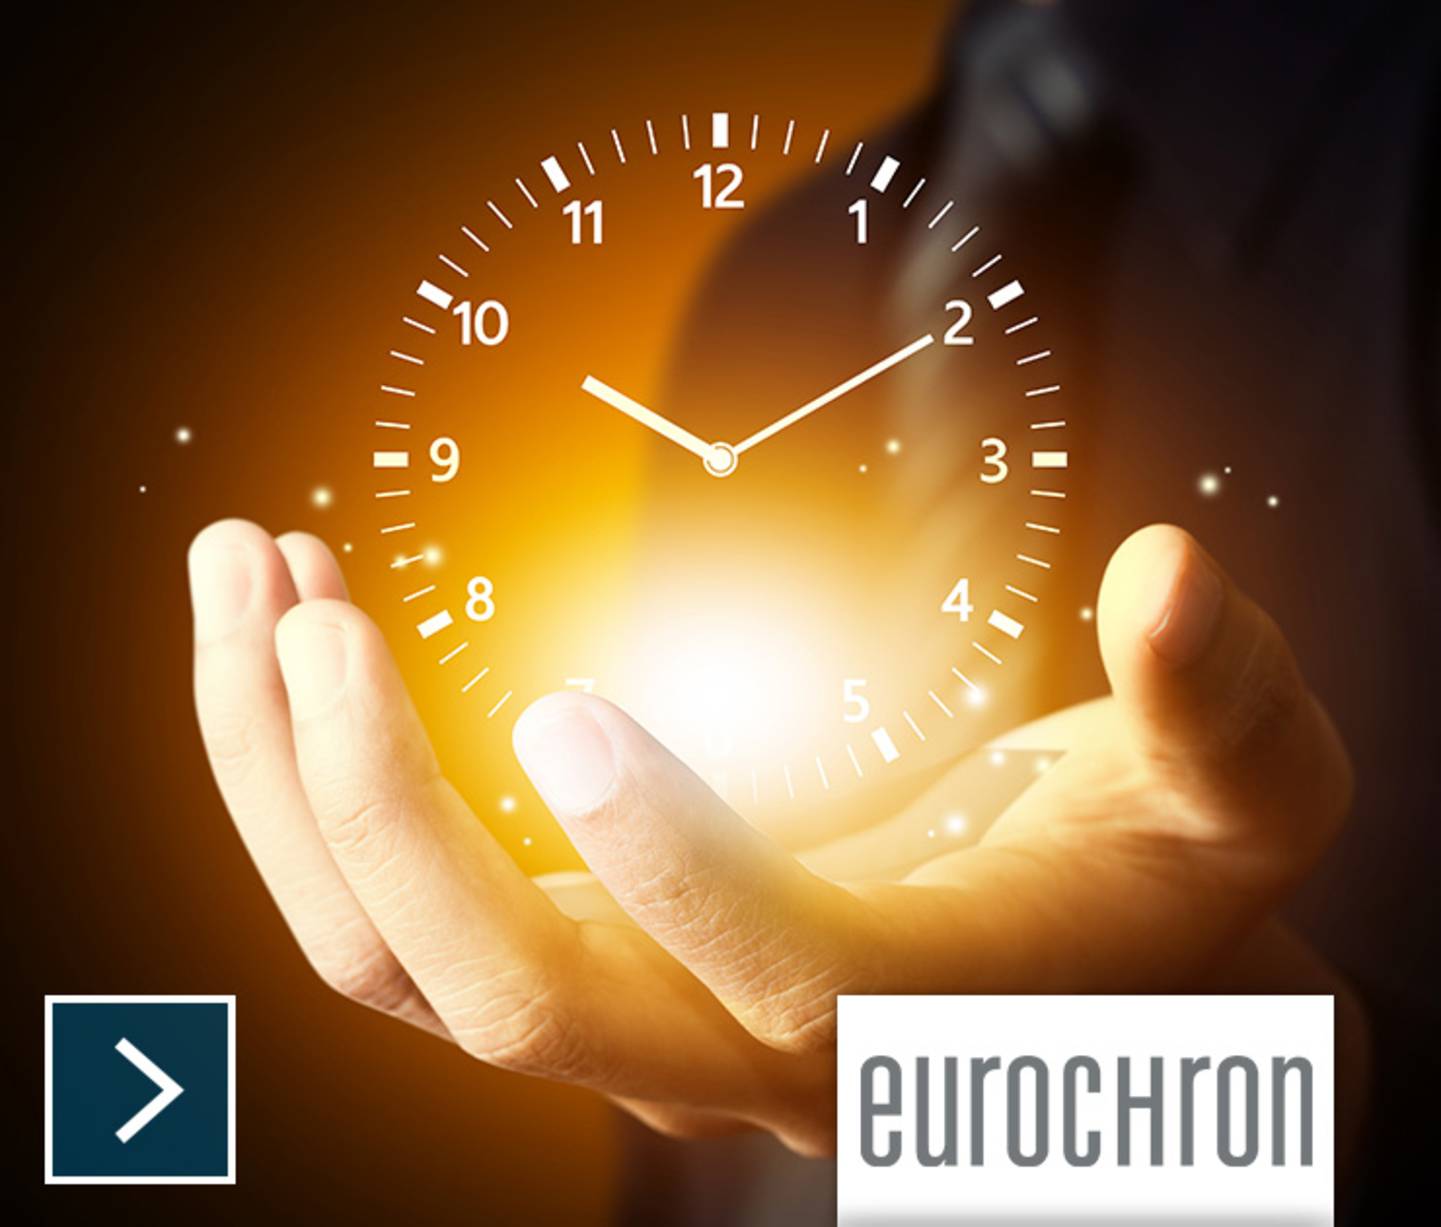 Eurochron »